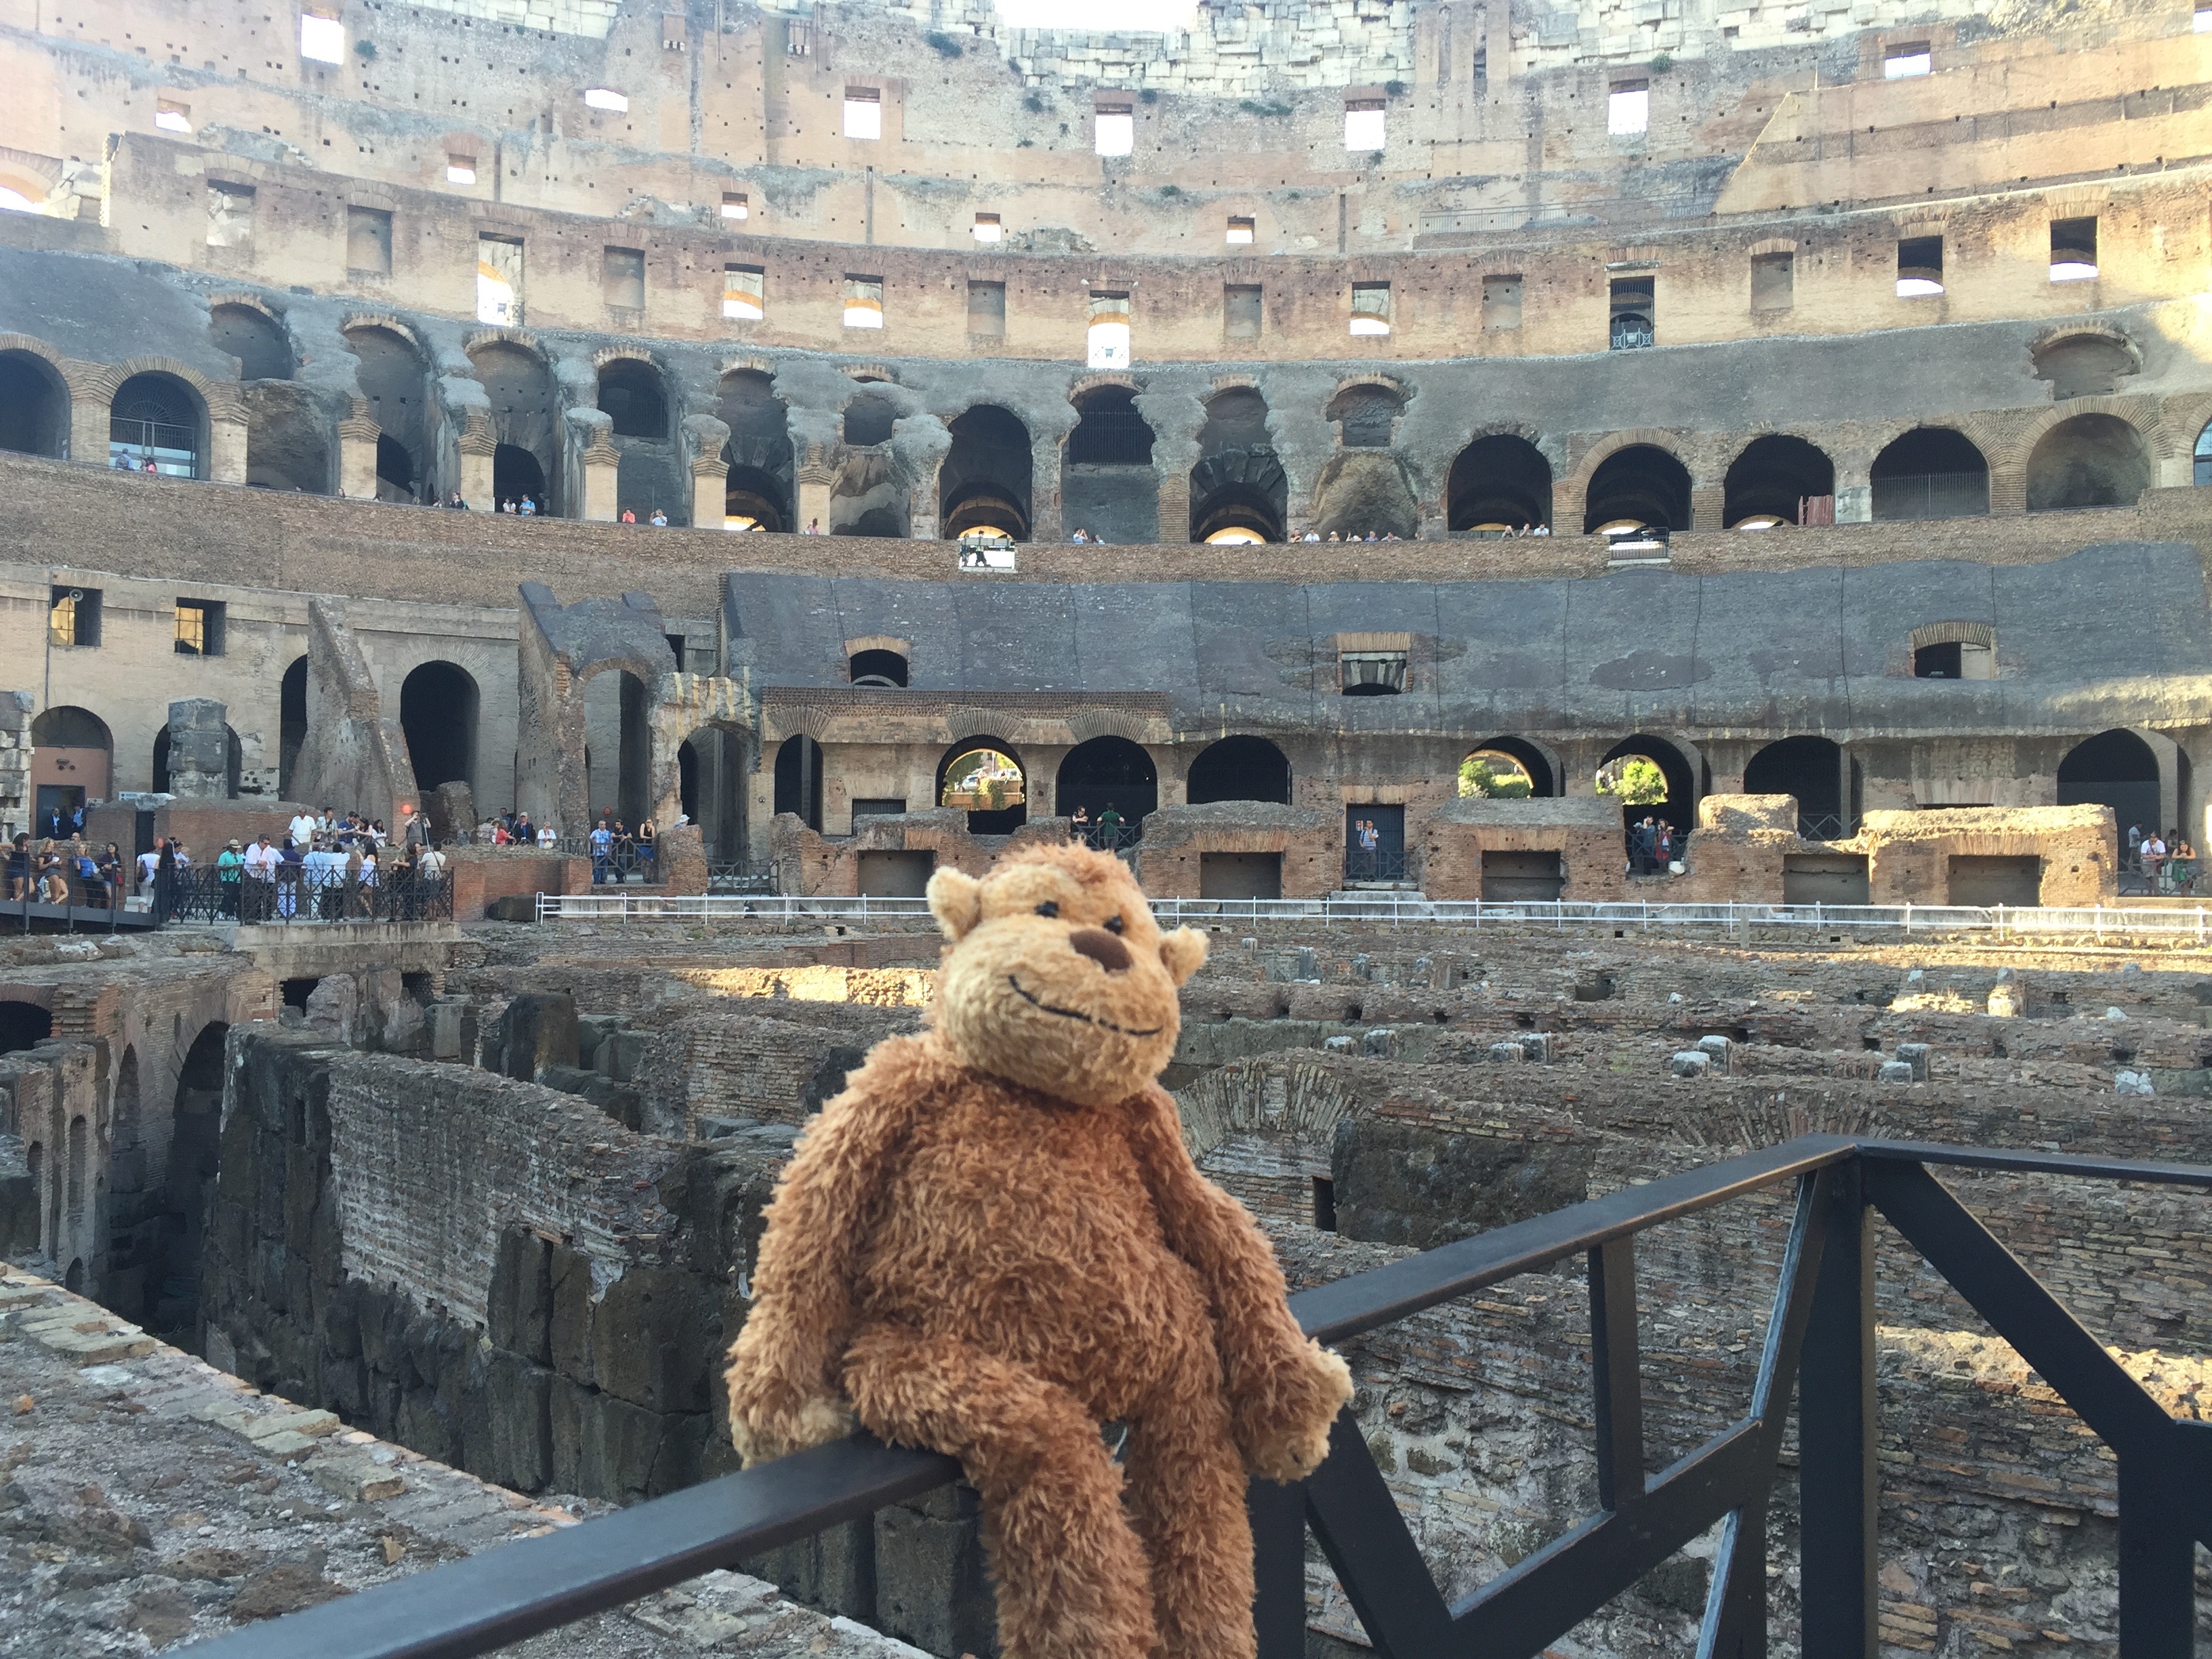 a stuffed animal on a railing in a coliseum